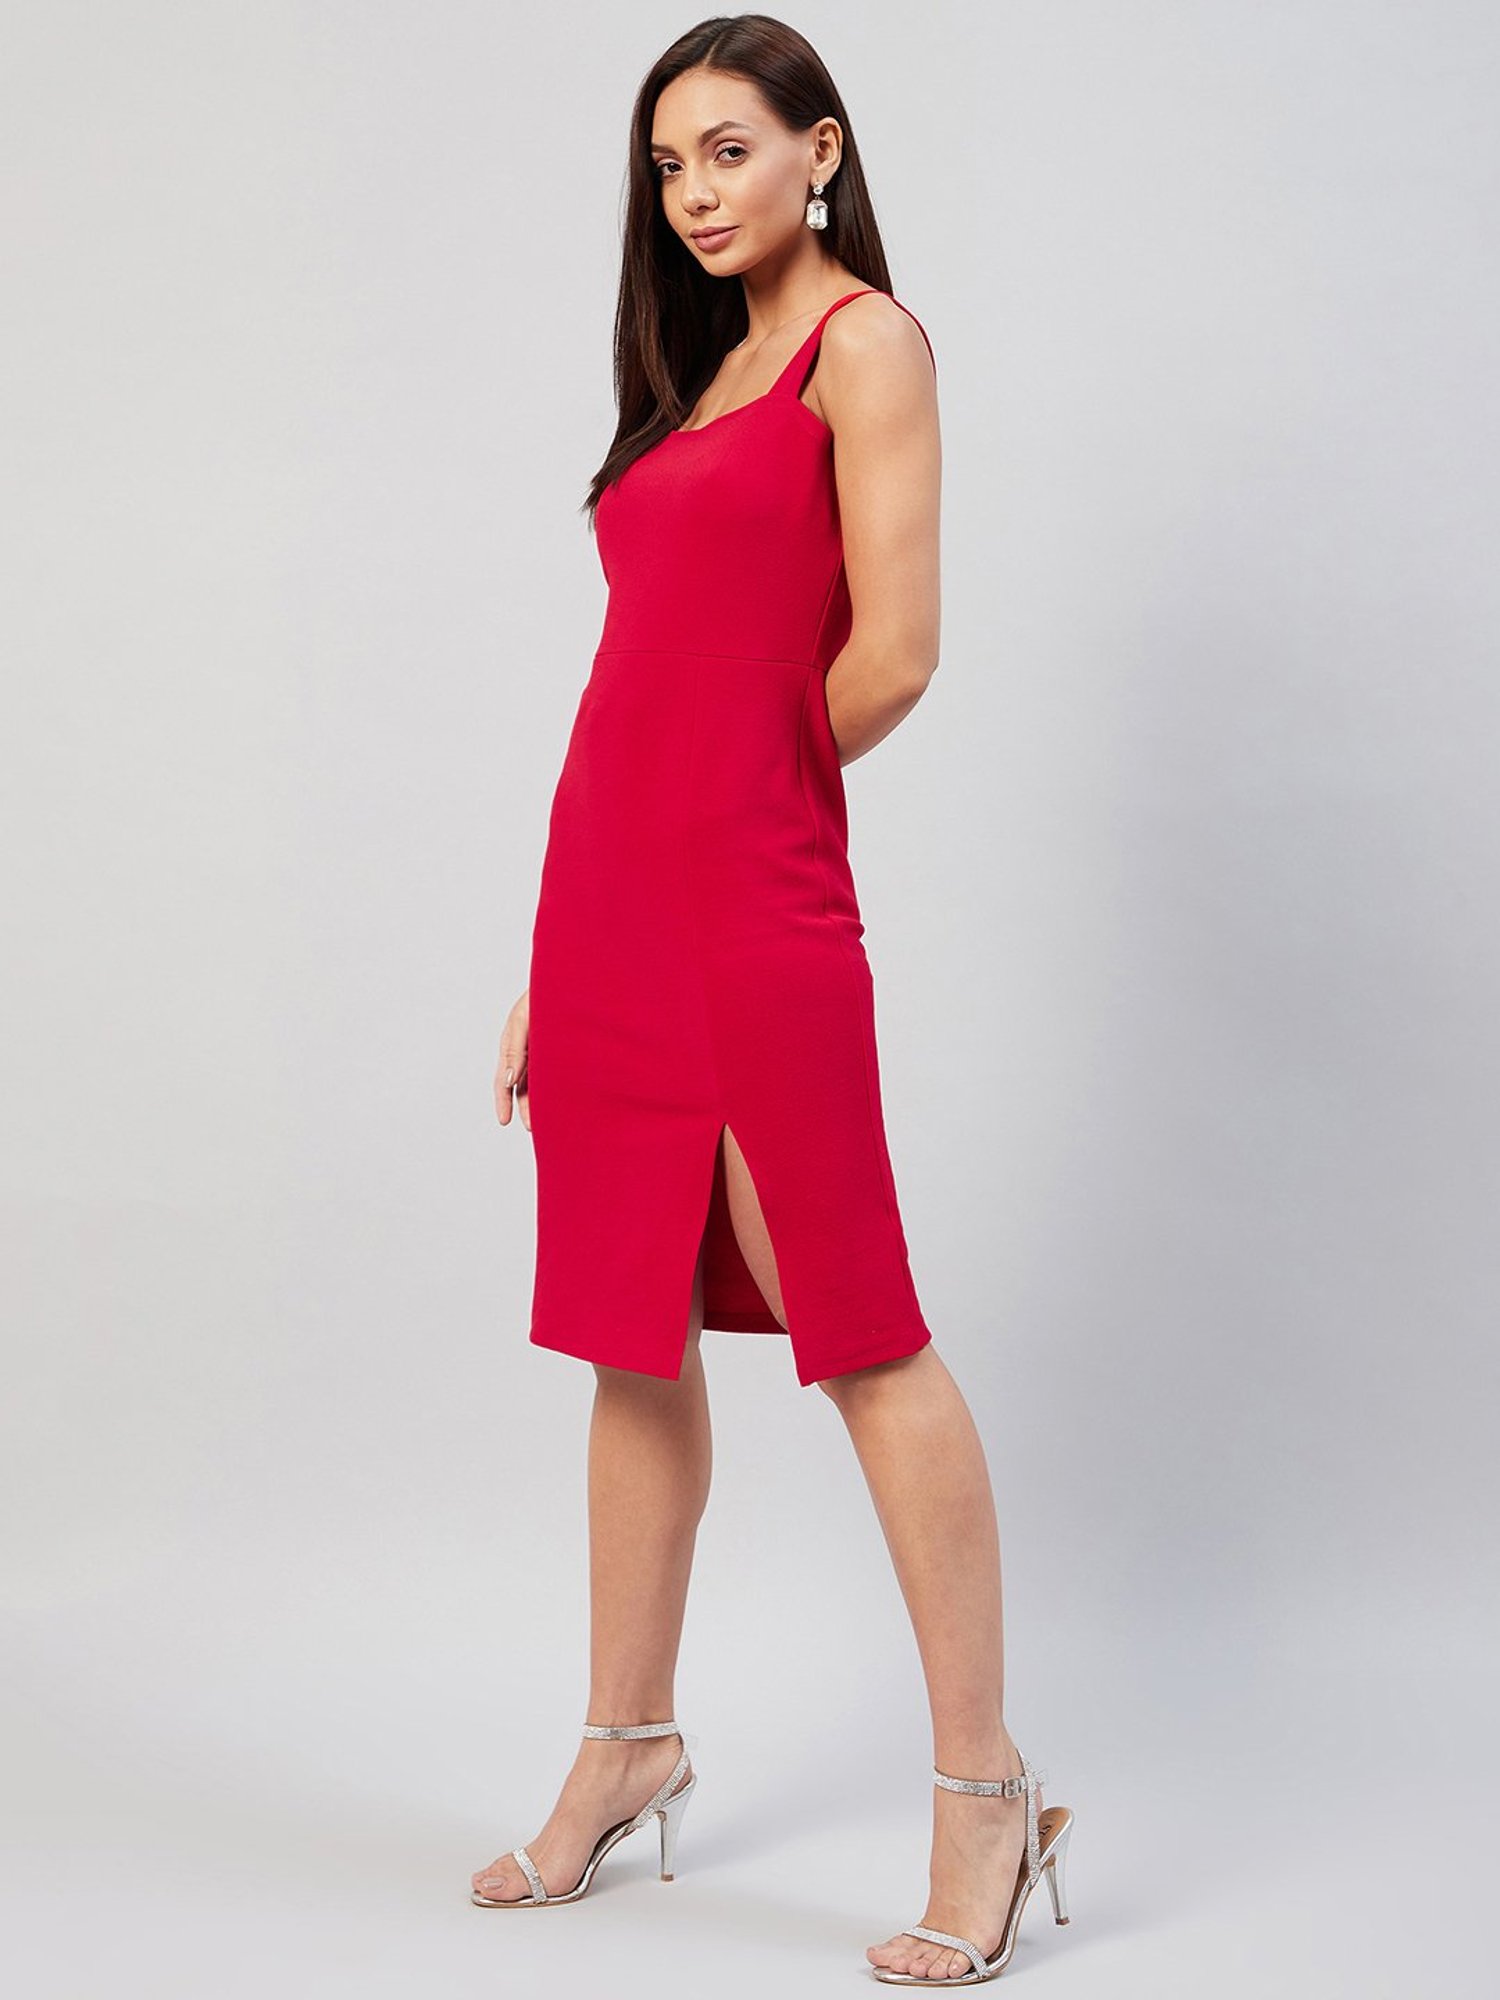 Buy Rare Red Midi Dress for Women's Online @ Tata CLiQ